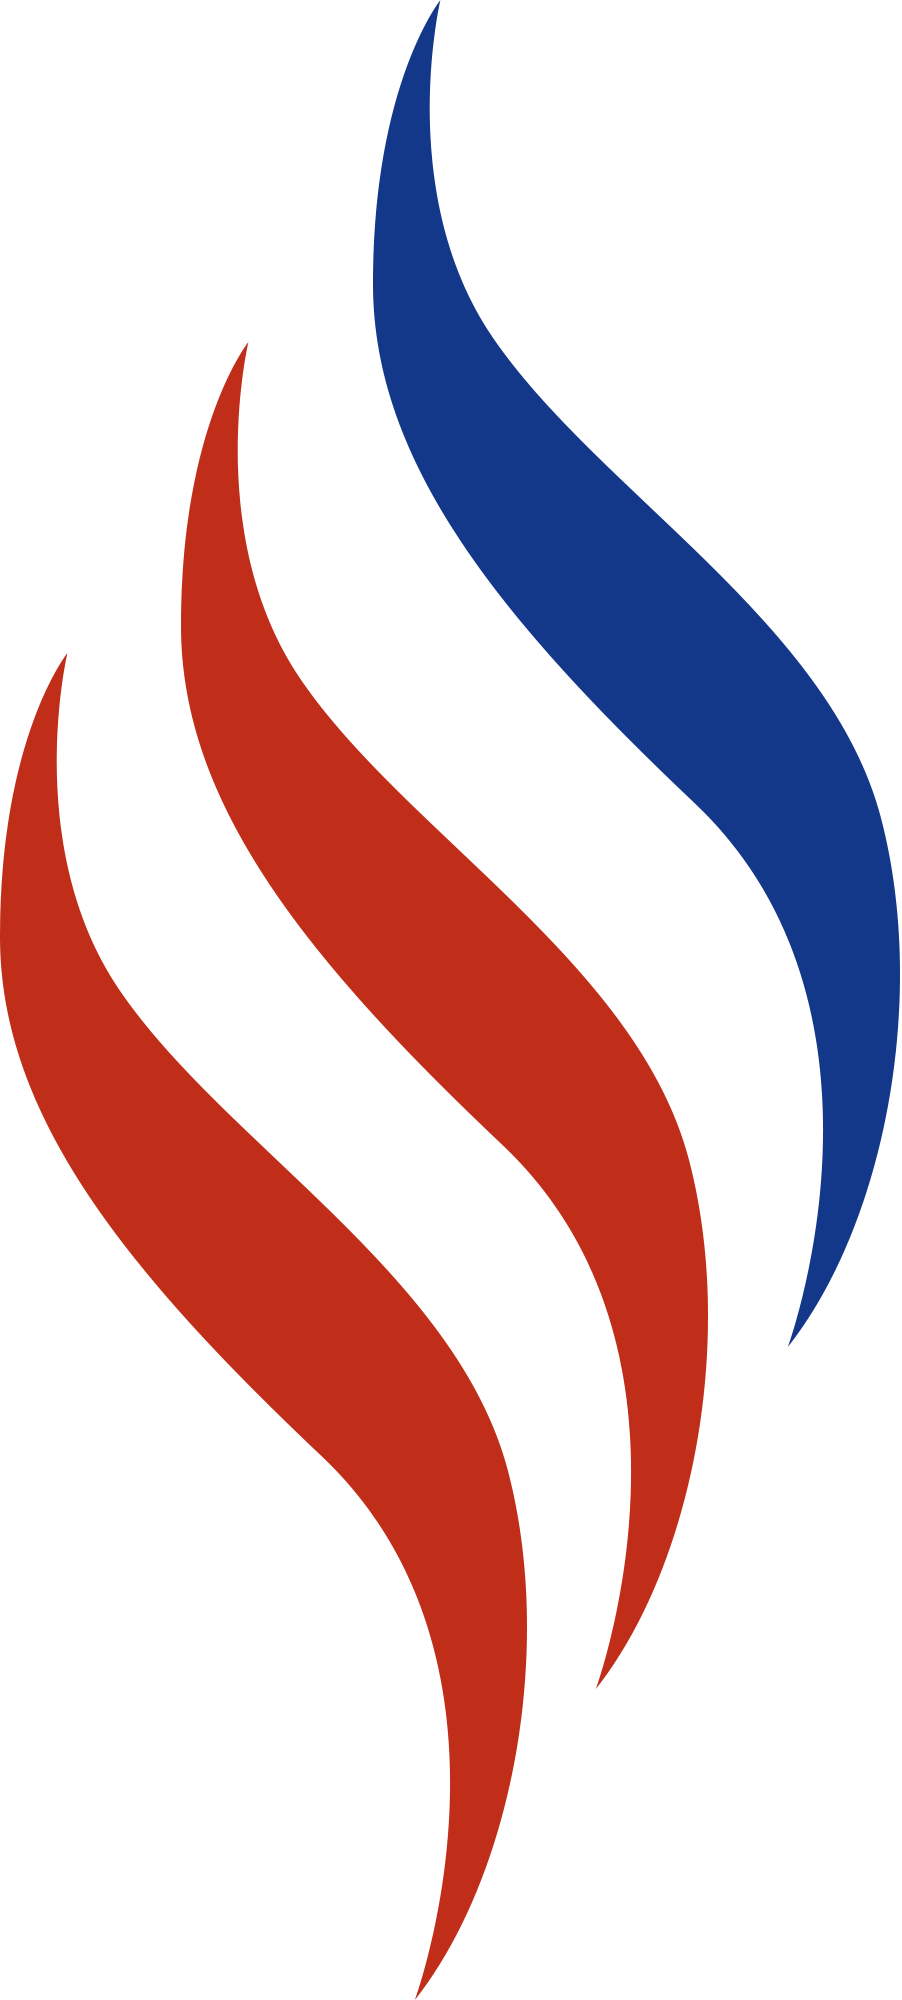 MCWVFCU logo symbol